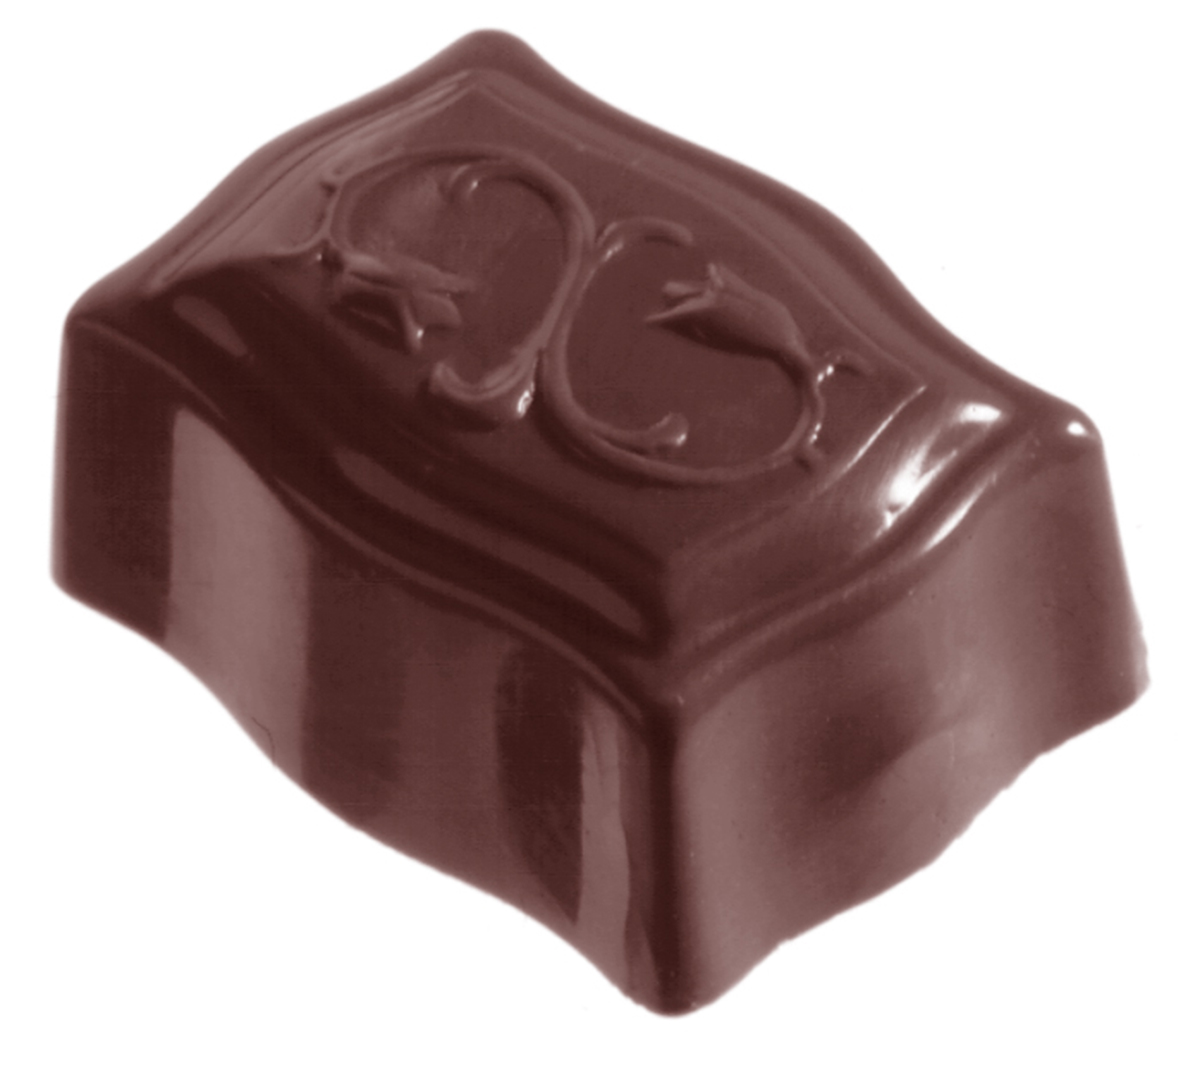 Se Professionel chokoladeform i polycarbonat - Guirlande CW1263 hos BageTid.dk